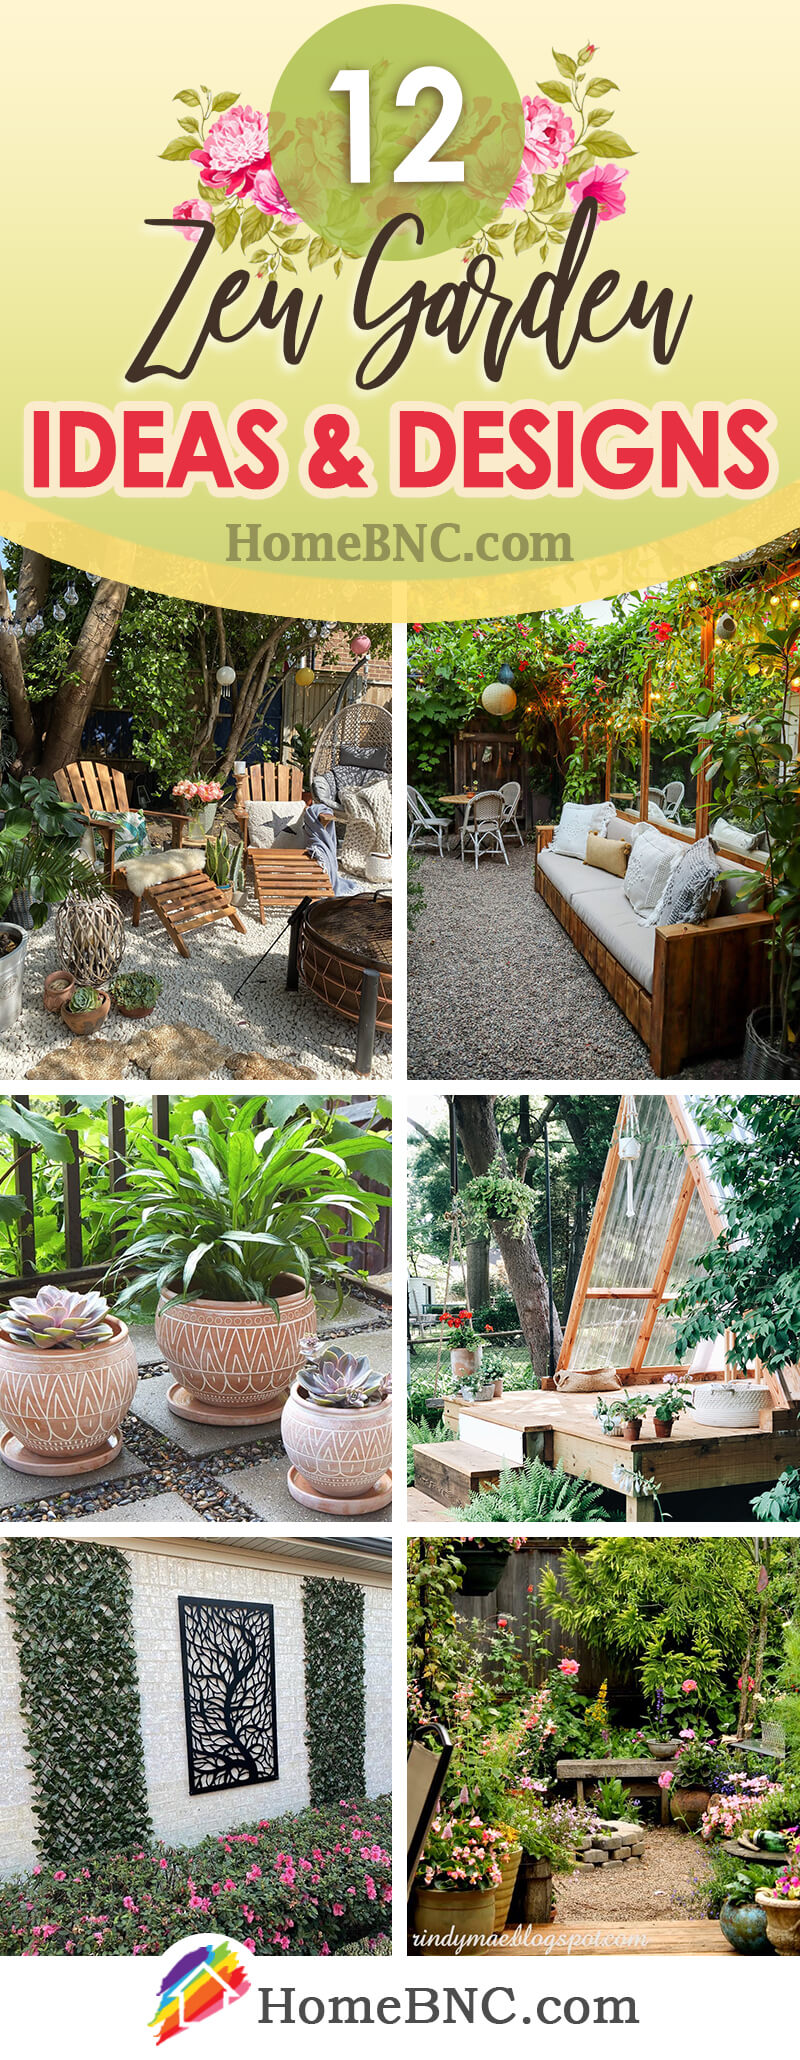 Best Zen Garden Ideas and Designs